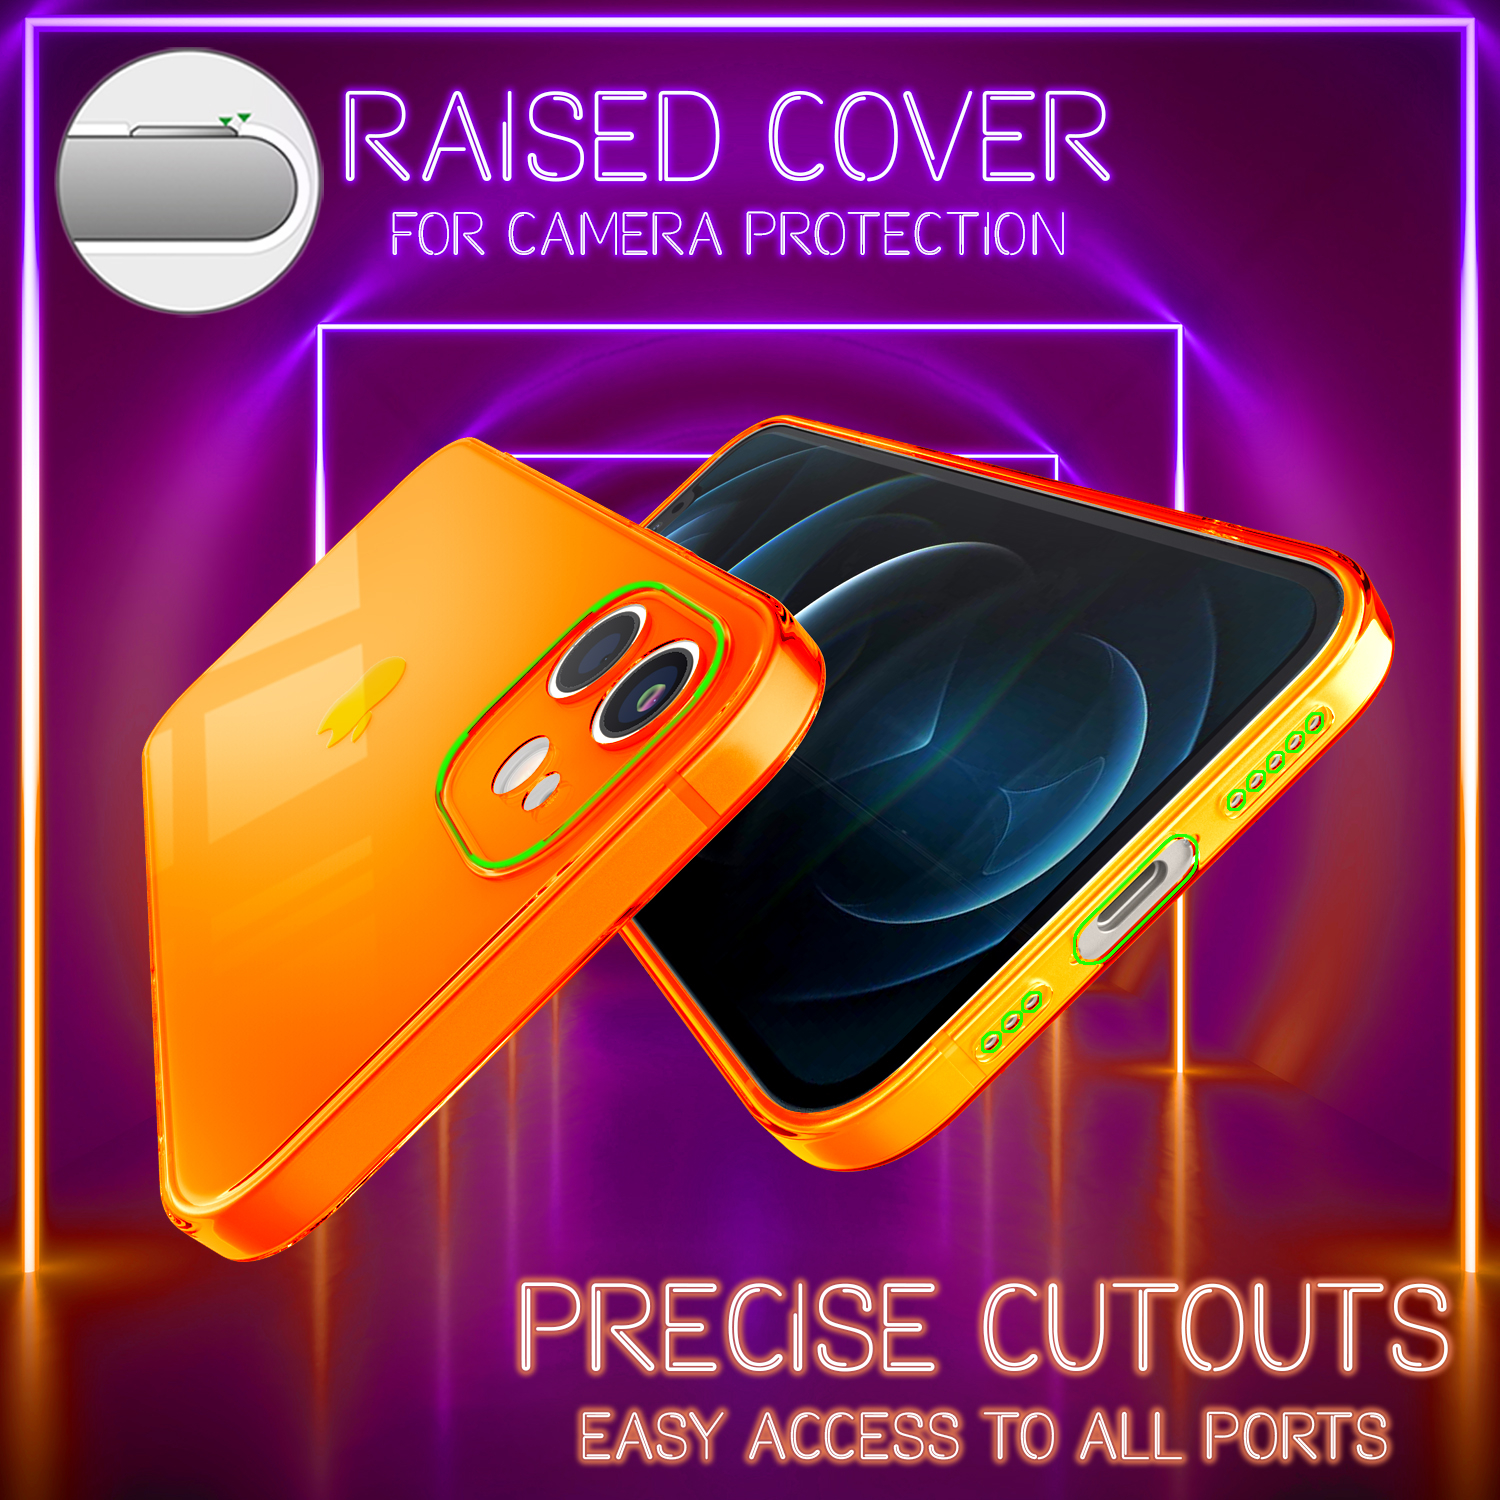 iPhone Backcover, Orange Apple, 12, NALIA Silikon Hülle, Neon Klar Transparente